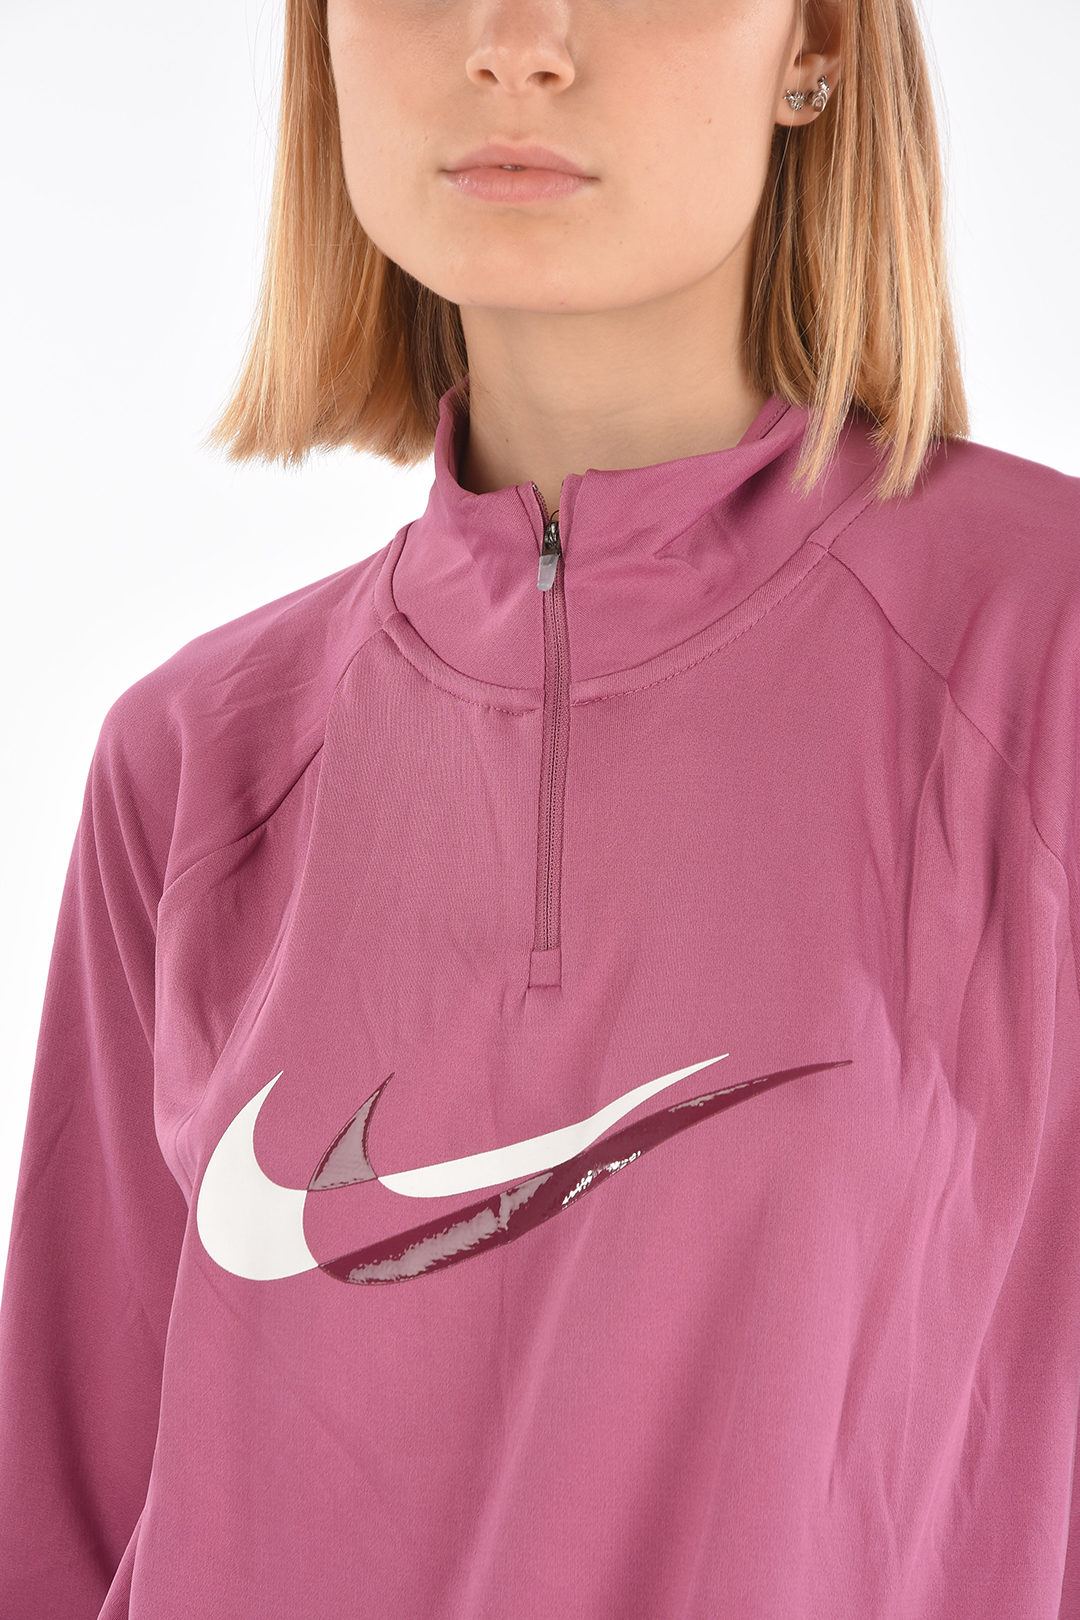 Nike Felpa Dry Fit a Collo Alto donna - Outlet